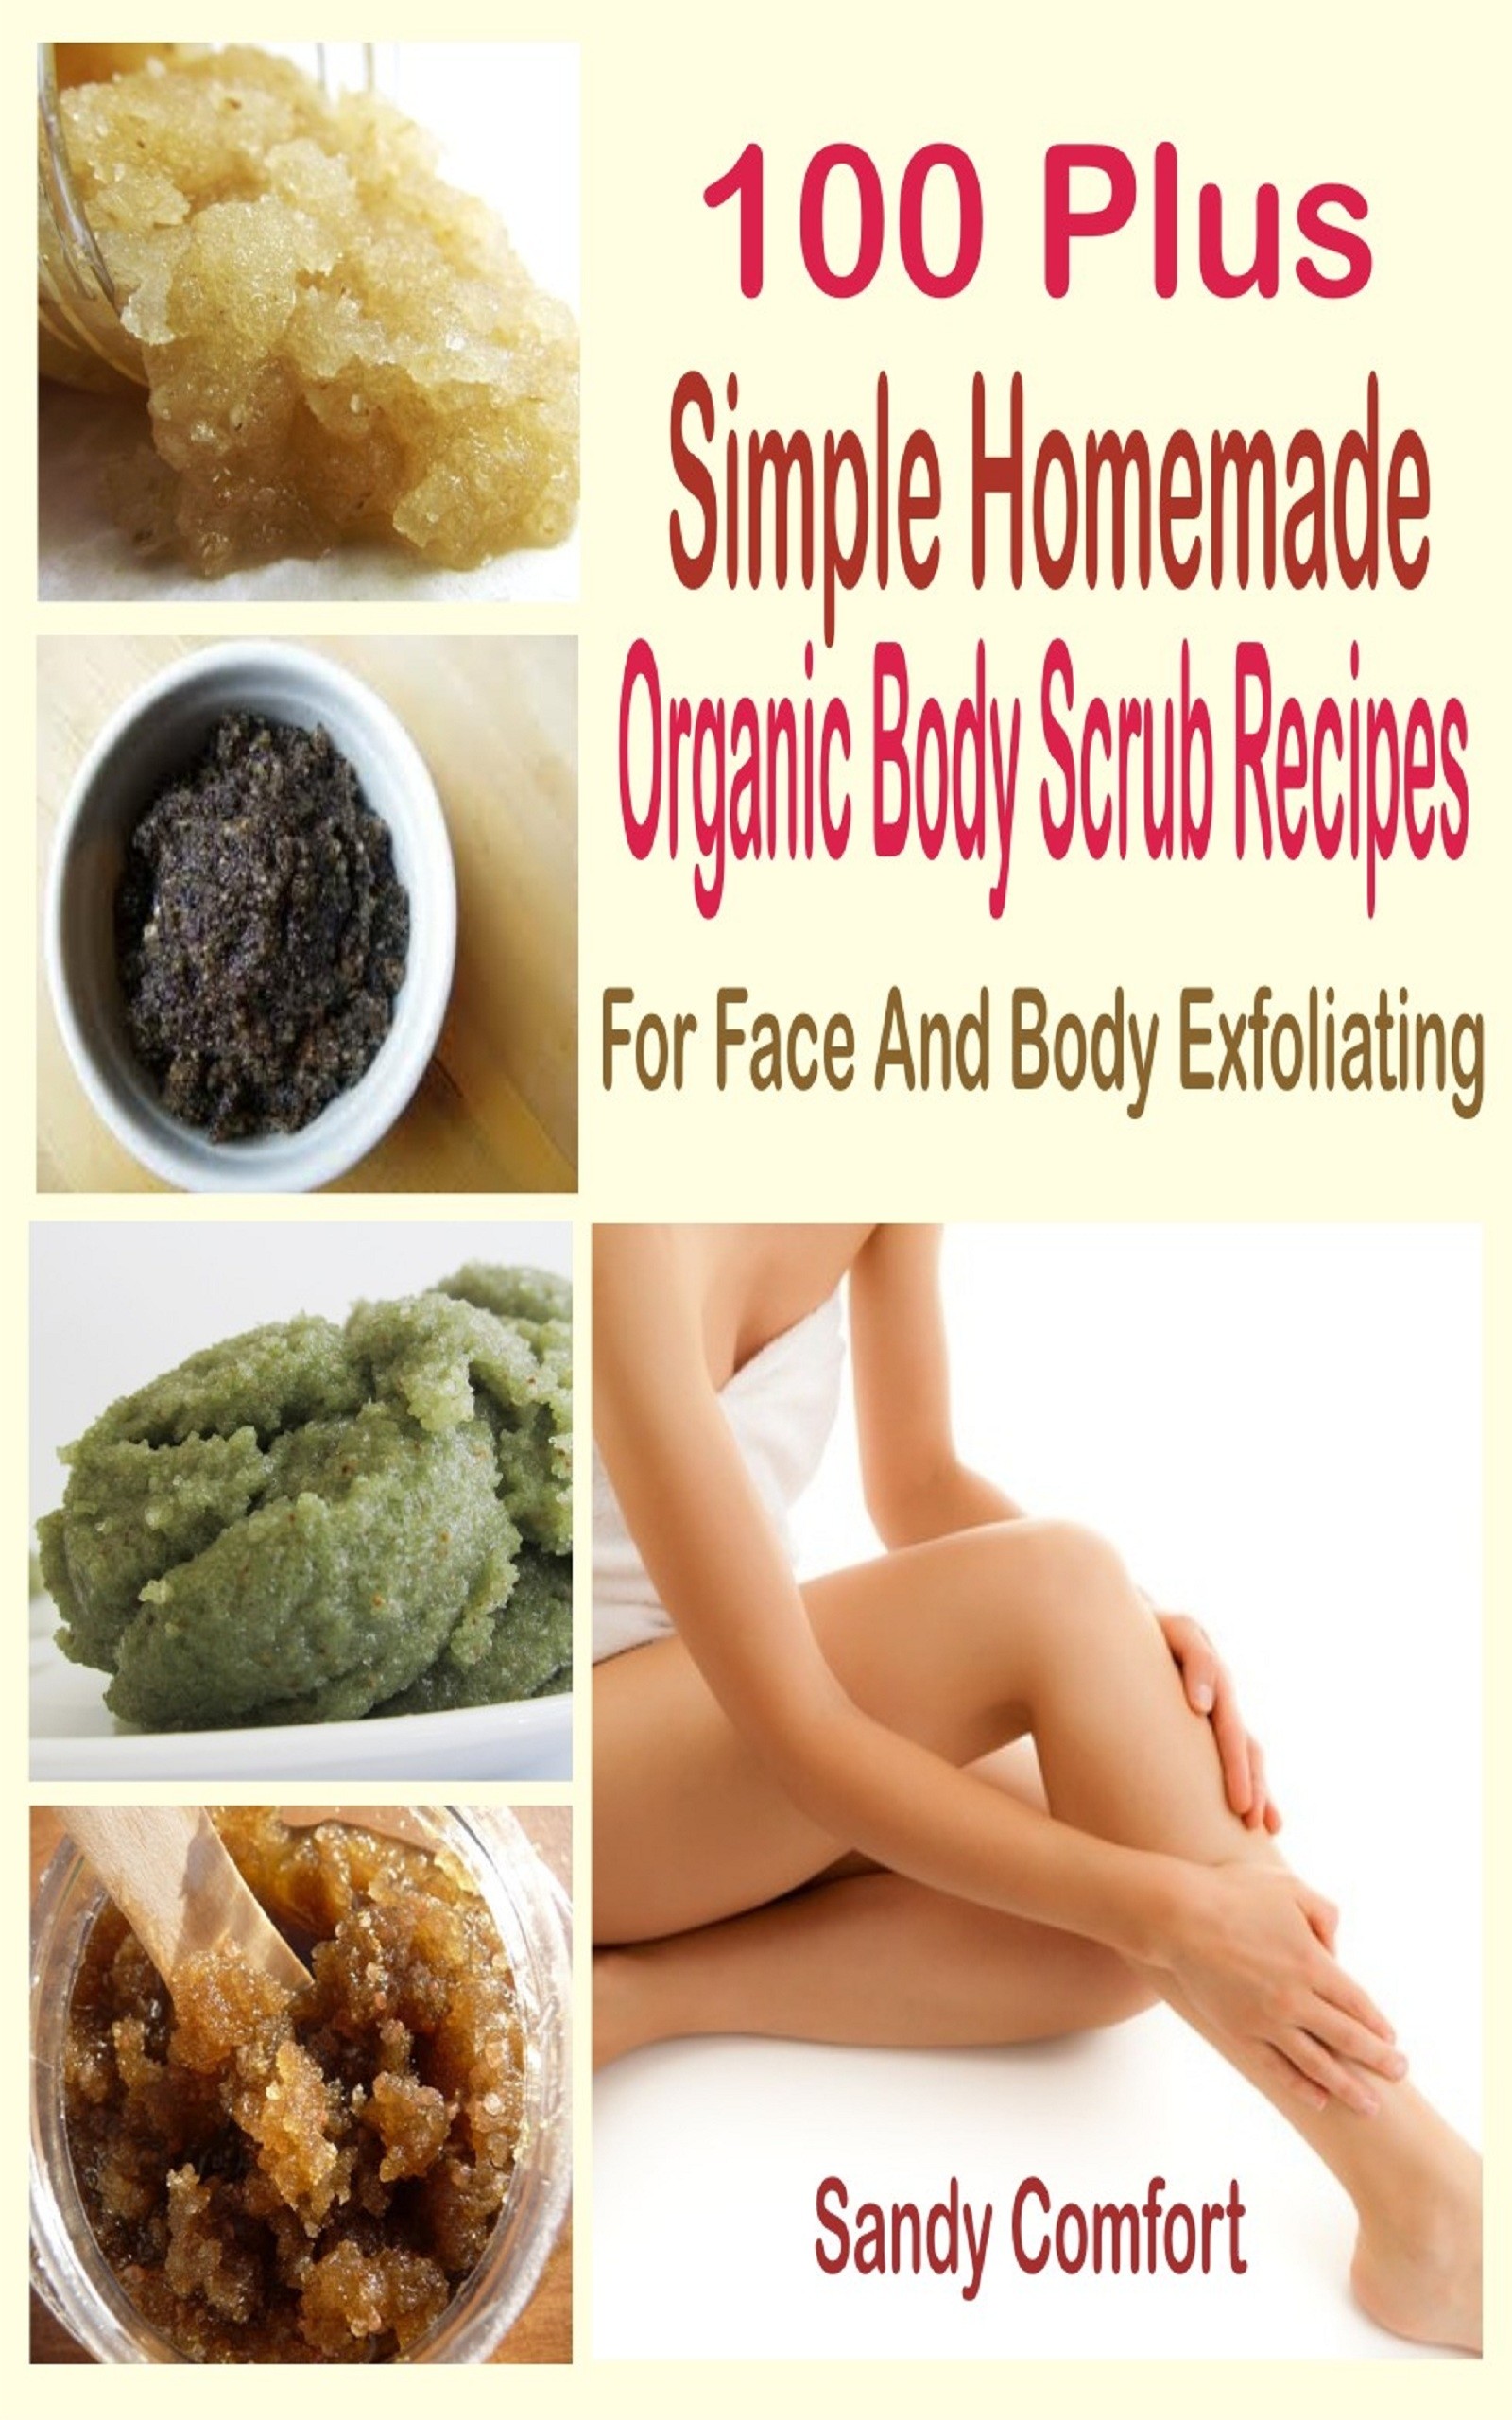 100 Plus Organic Body Scrub Recipes